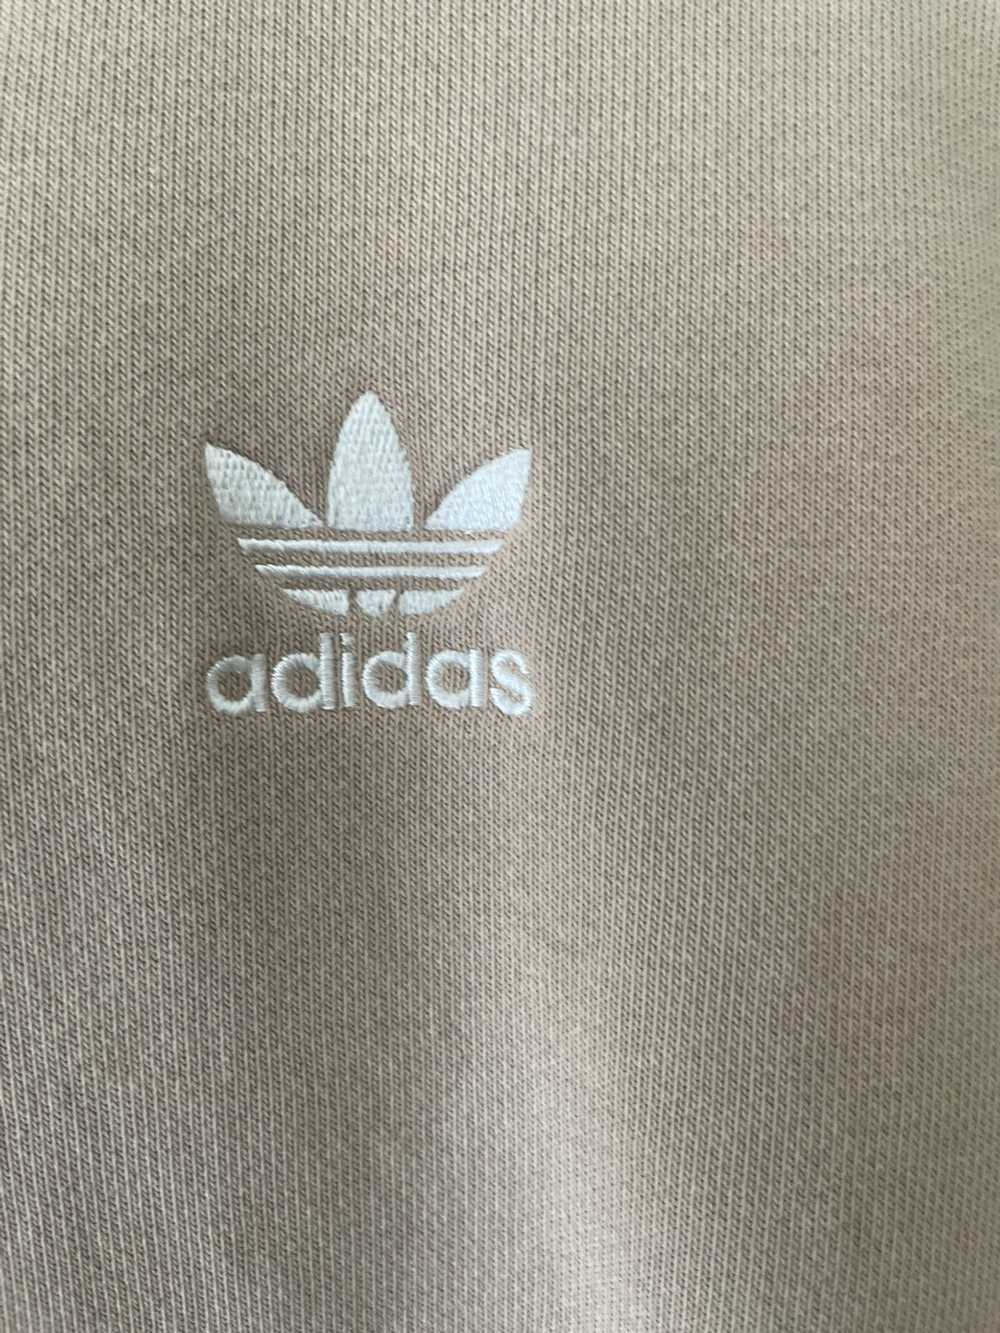 Adidas Adidas hoodie size small - image 1